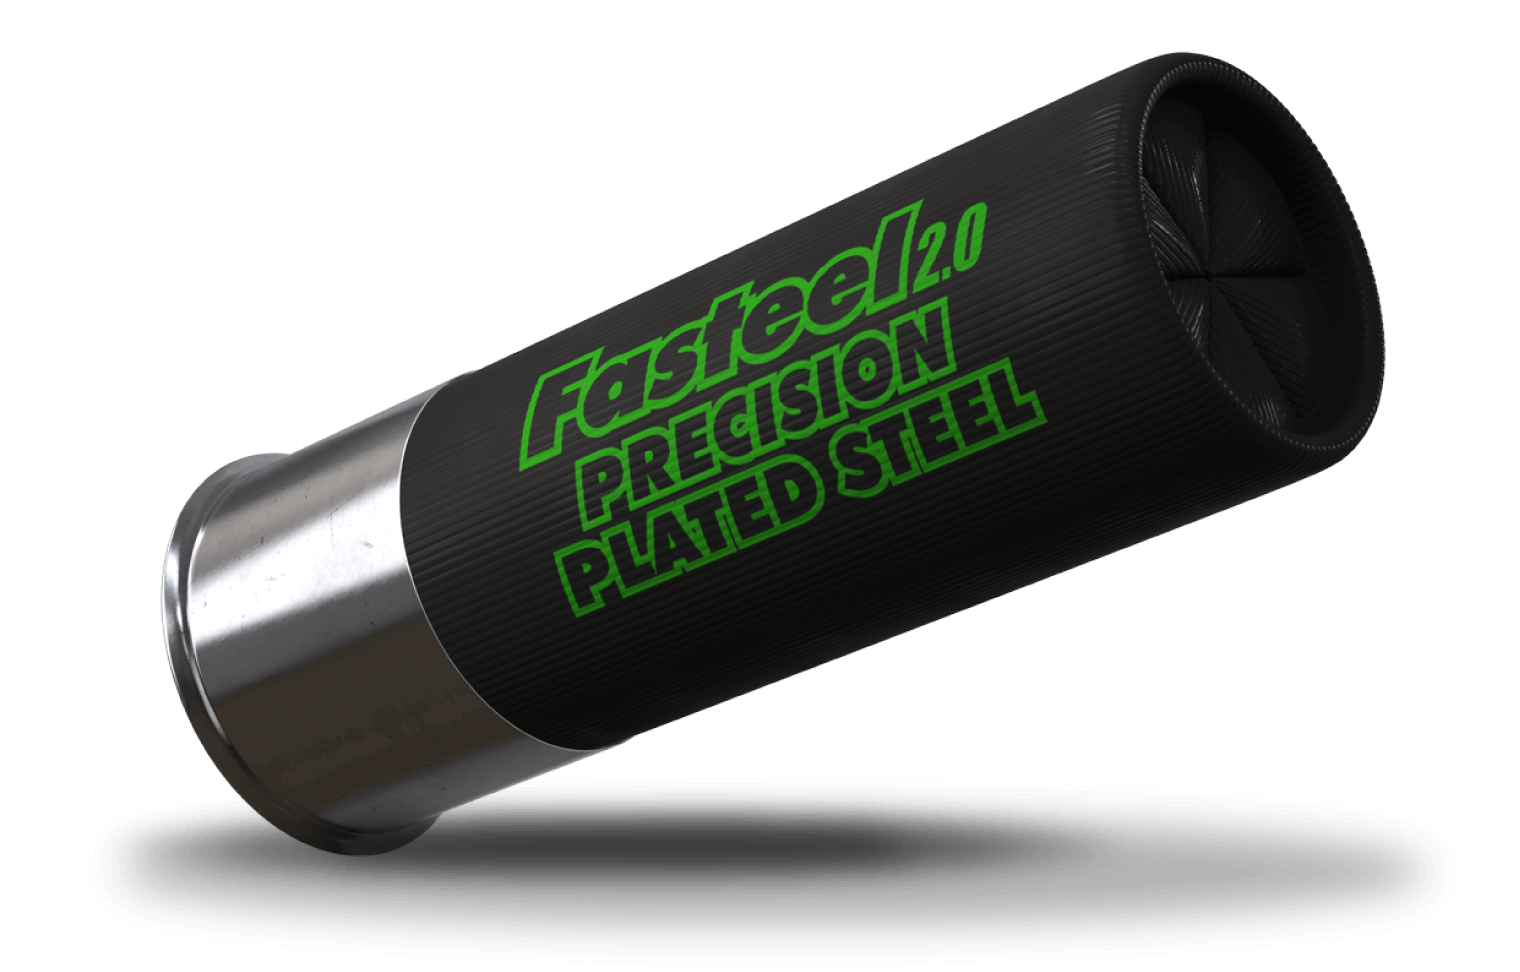 Fasteel 2.0 Precision Steel Cartridge